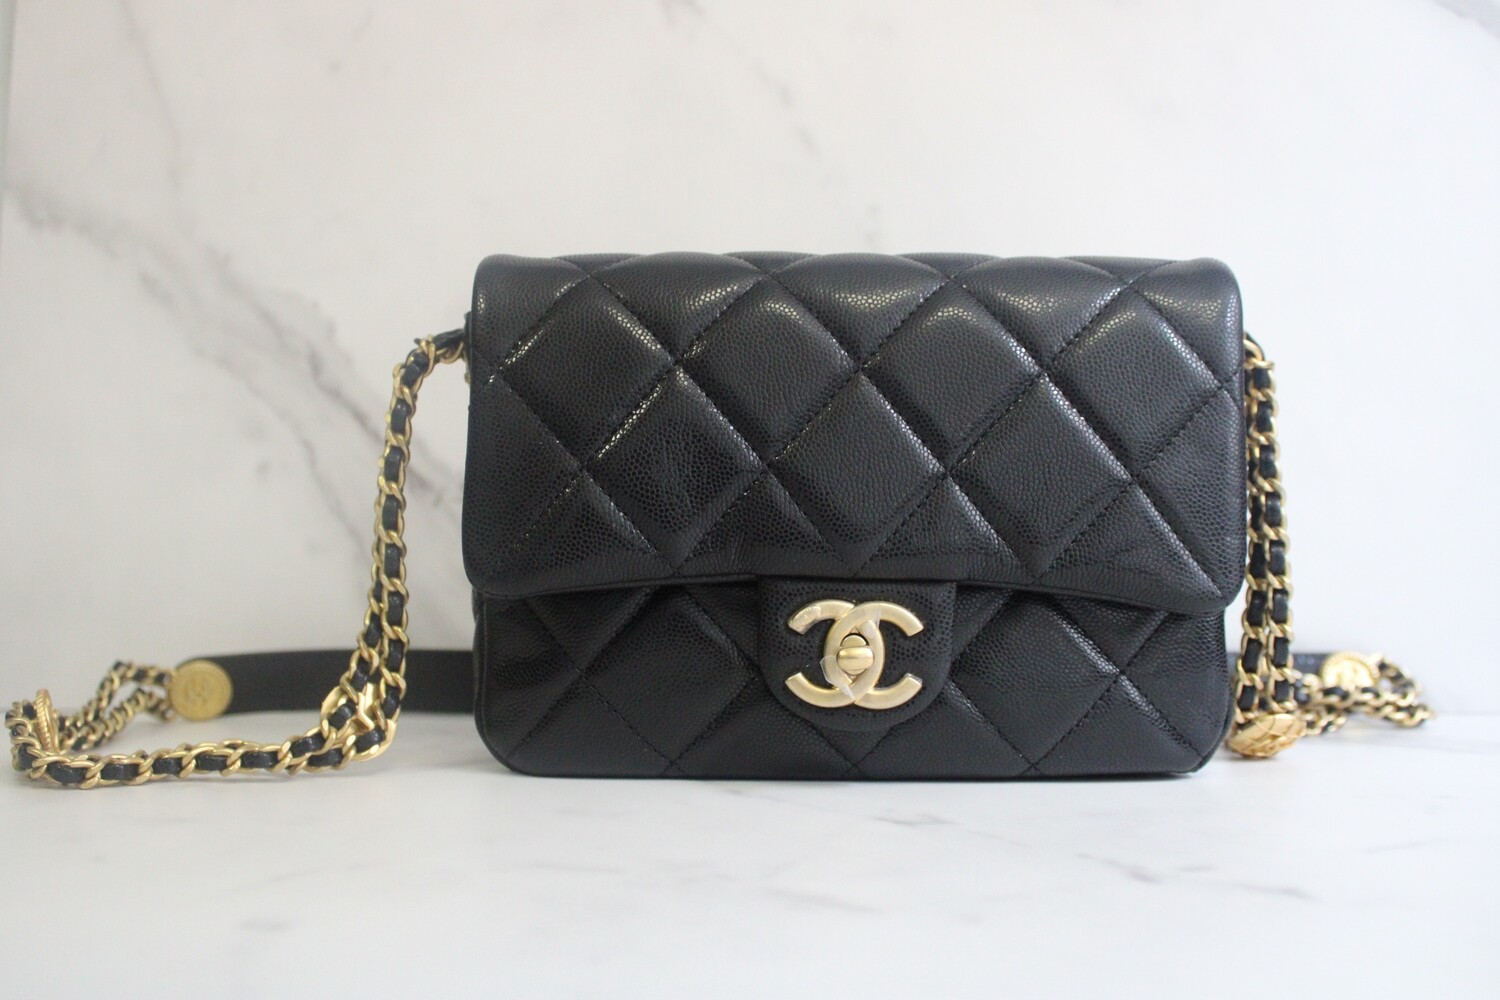 * BOSTON Chanel Seasonal Bag, 22A Black Caviar Leather, Gold Hardware, New in Box